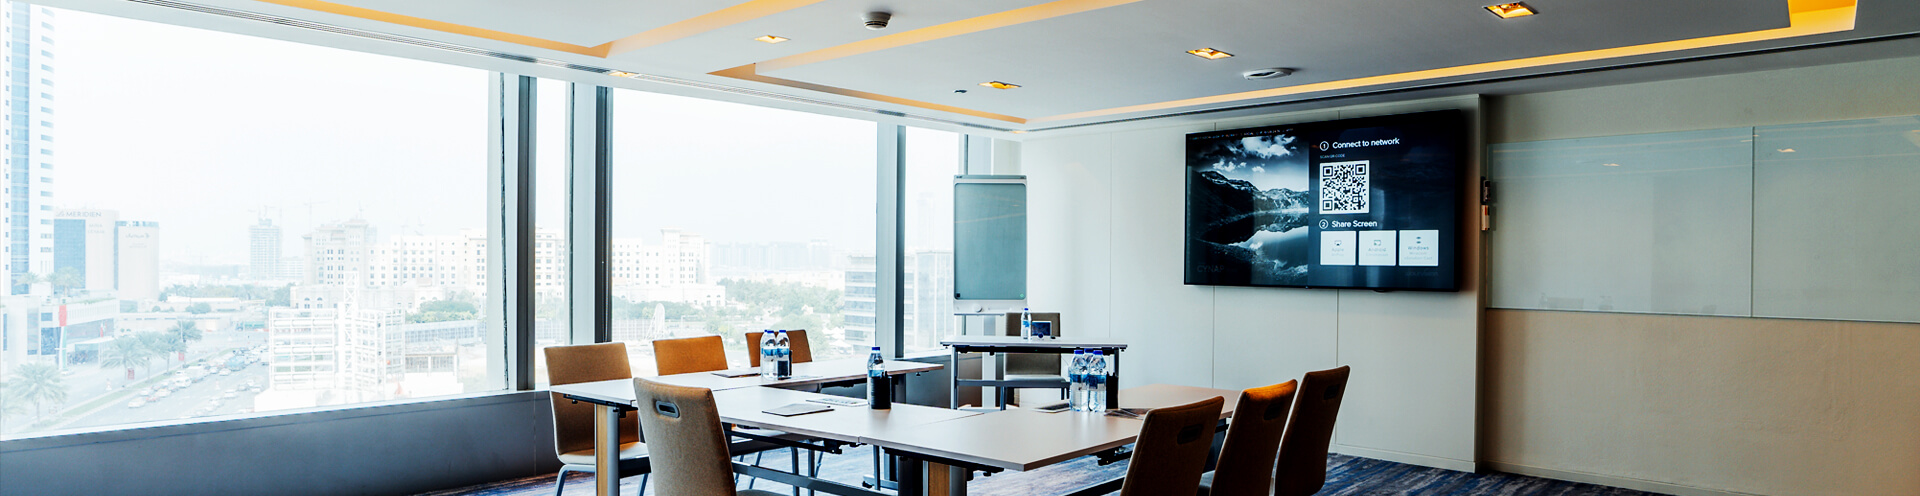 Careers Interior Design Dubai Company Jobs